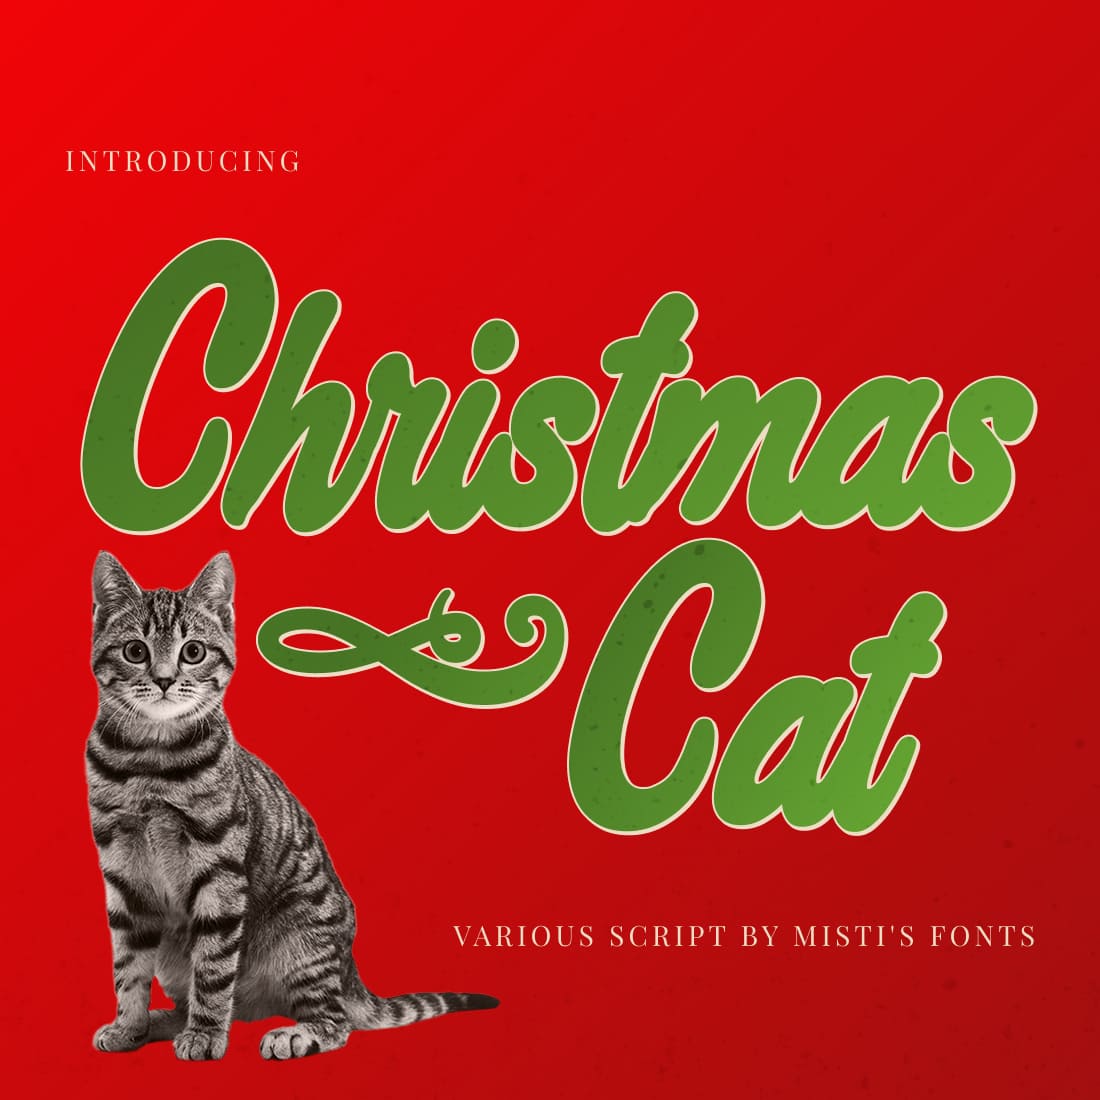 Christmas Cat Free Font main cover by MasterBundles.